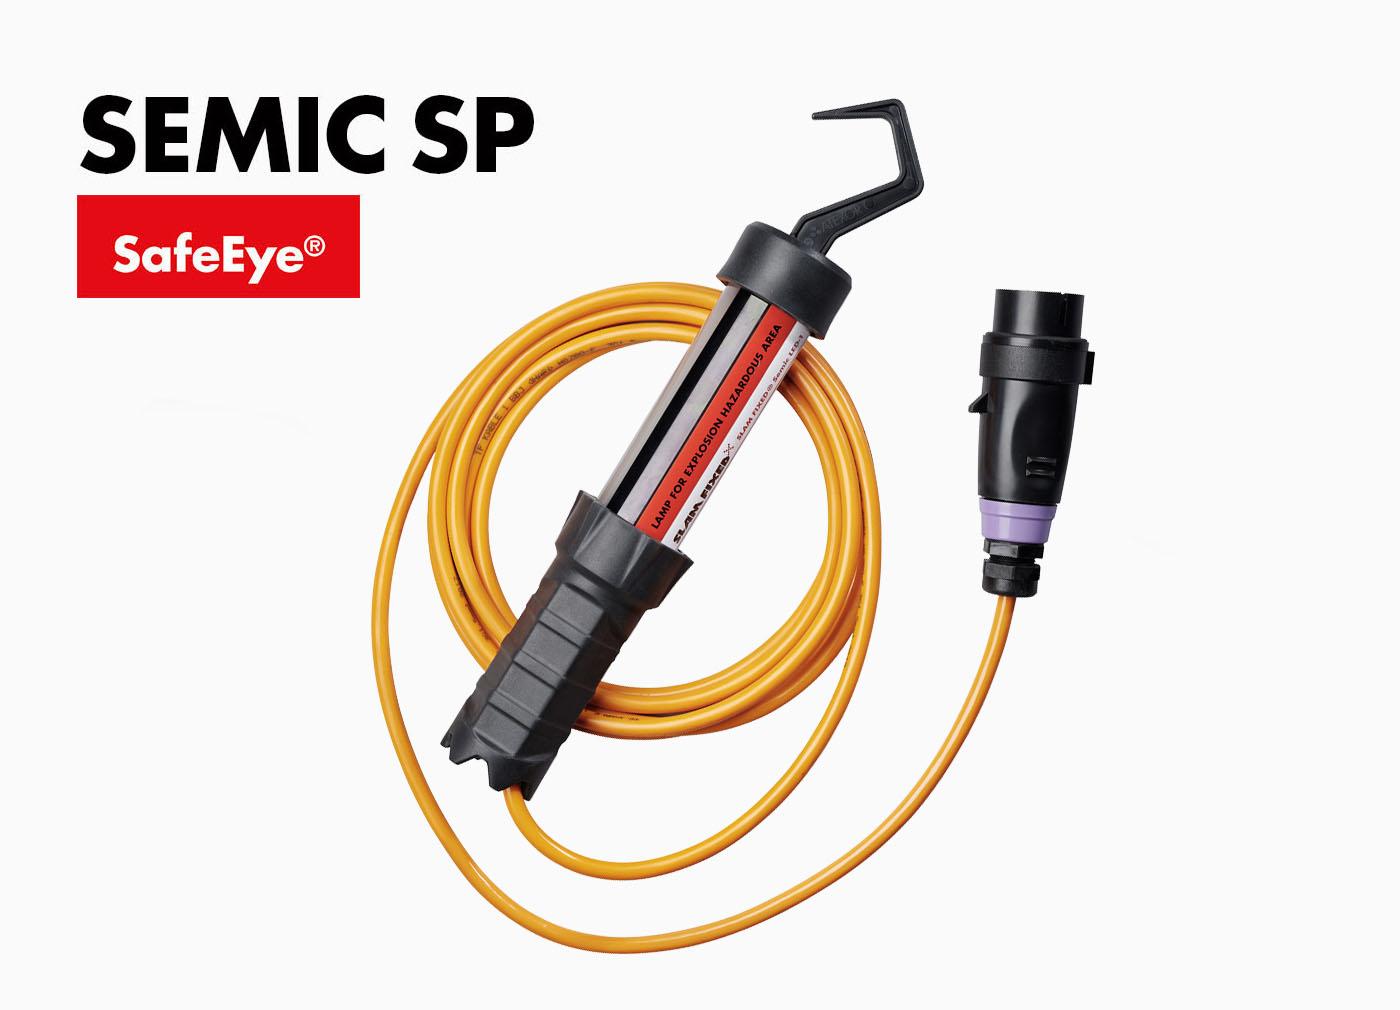 SEMIC SP worklight with Safeeye logo